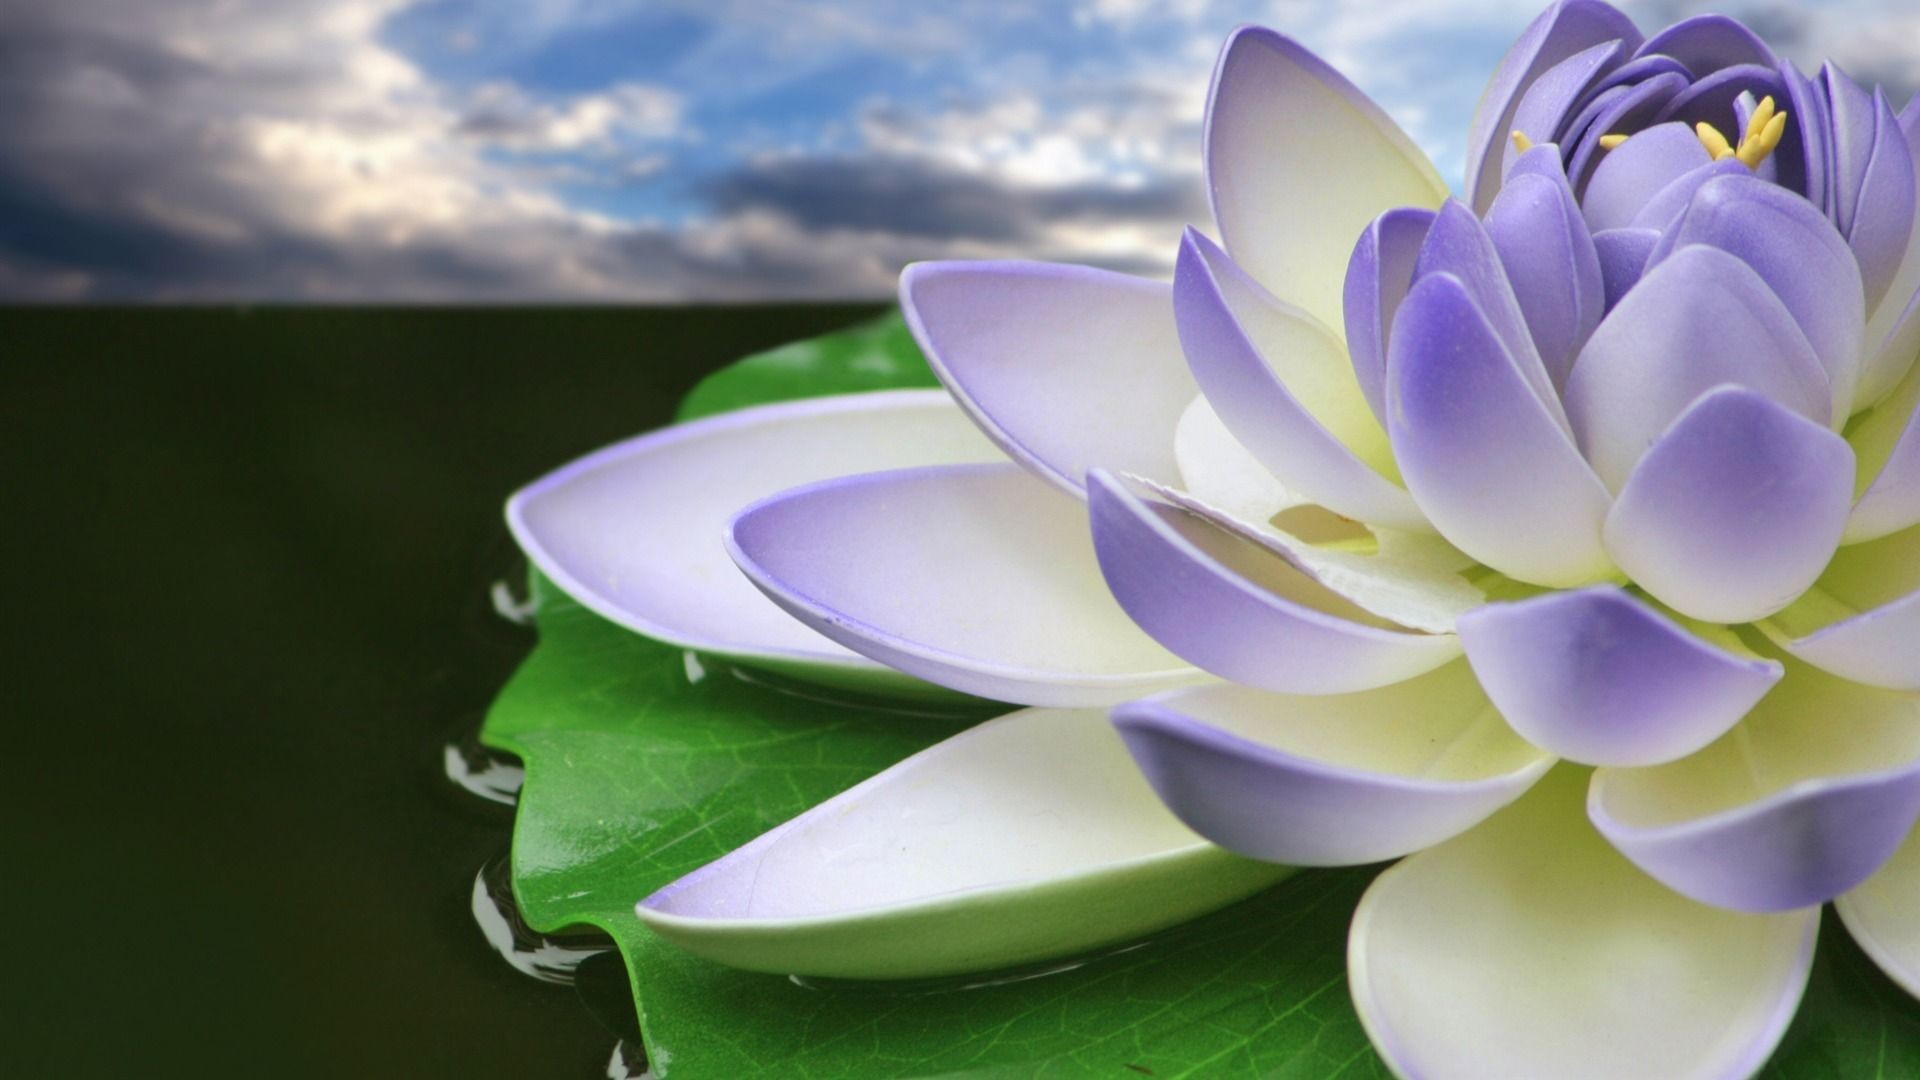 Data Src Lily Wallpaper Image - Lotus Flower White And Purple - HD Wallpaper 